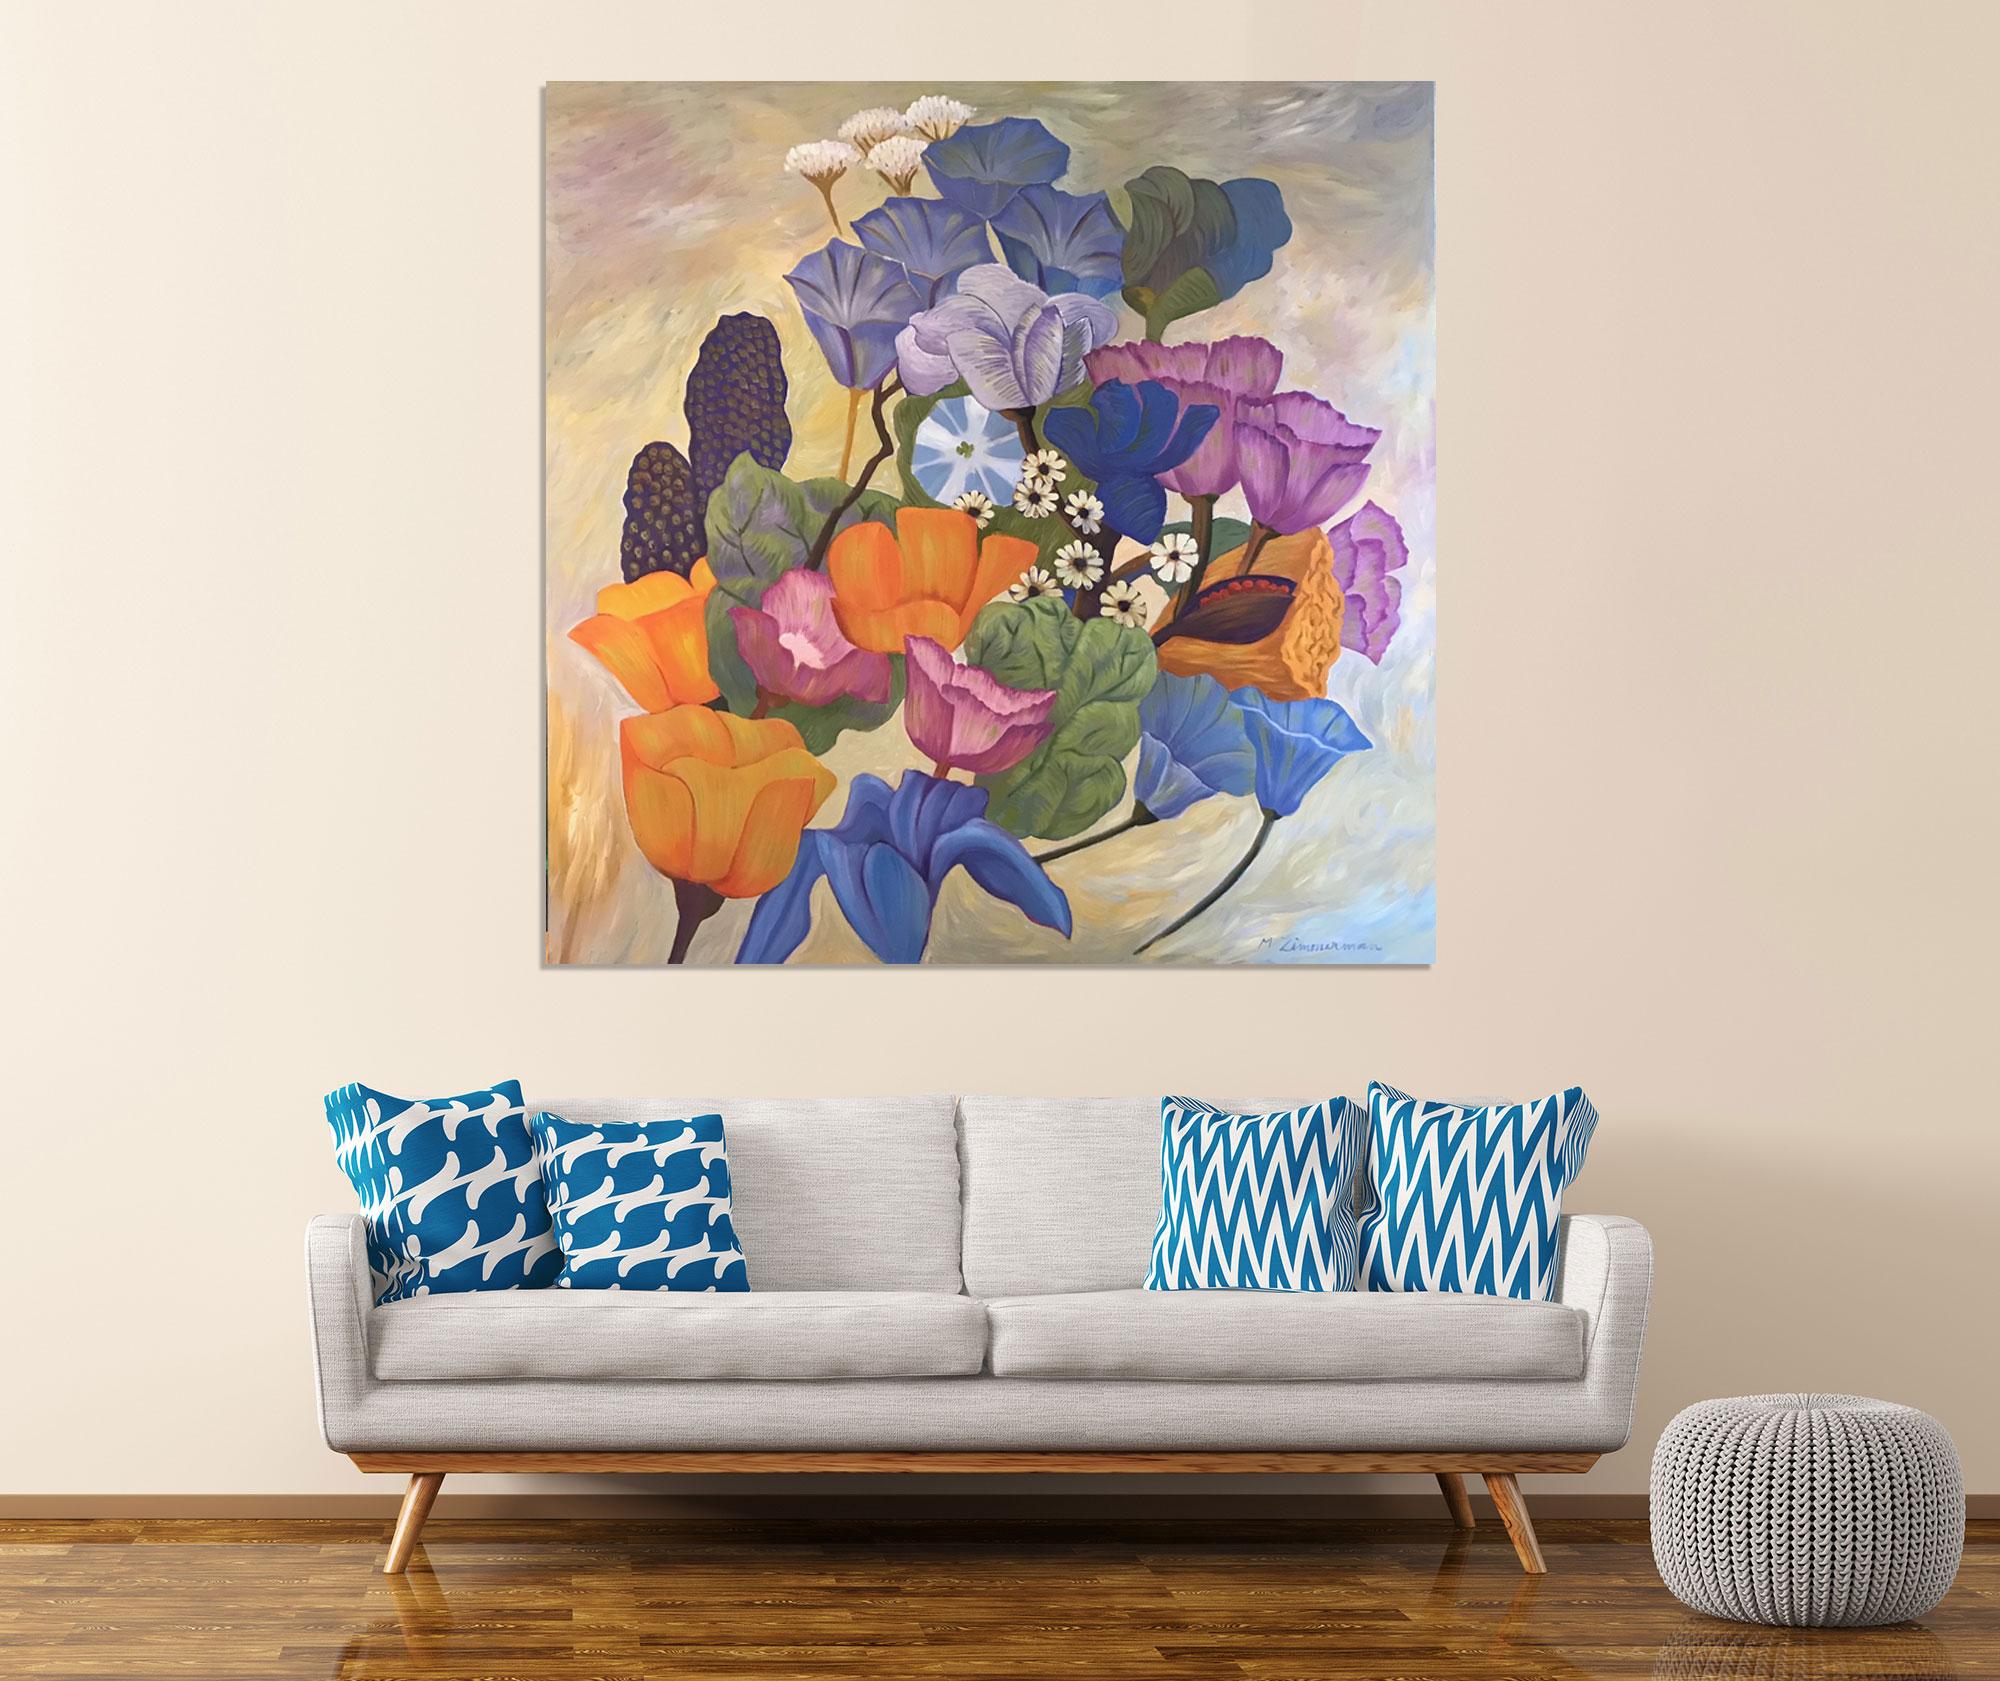 Big Sur bouquet - Still-life Art by Marc Zimmerman For Sale 1